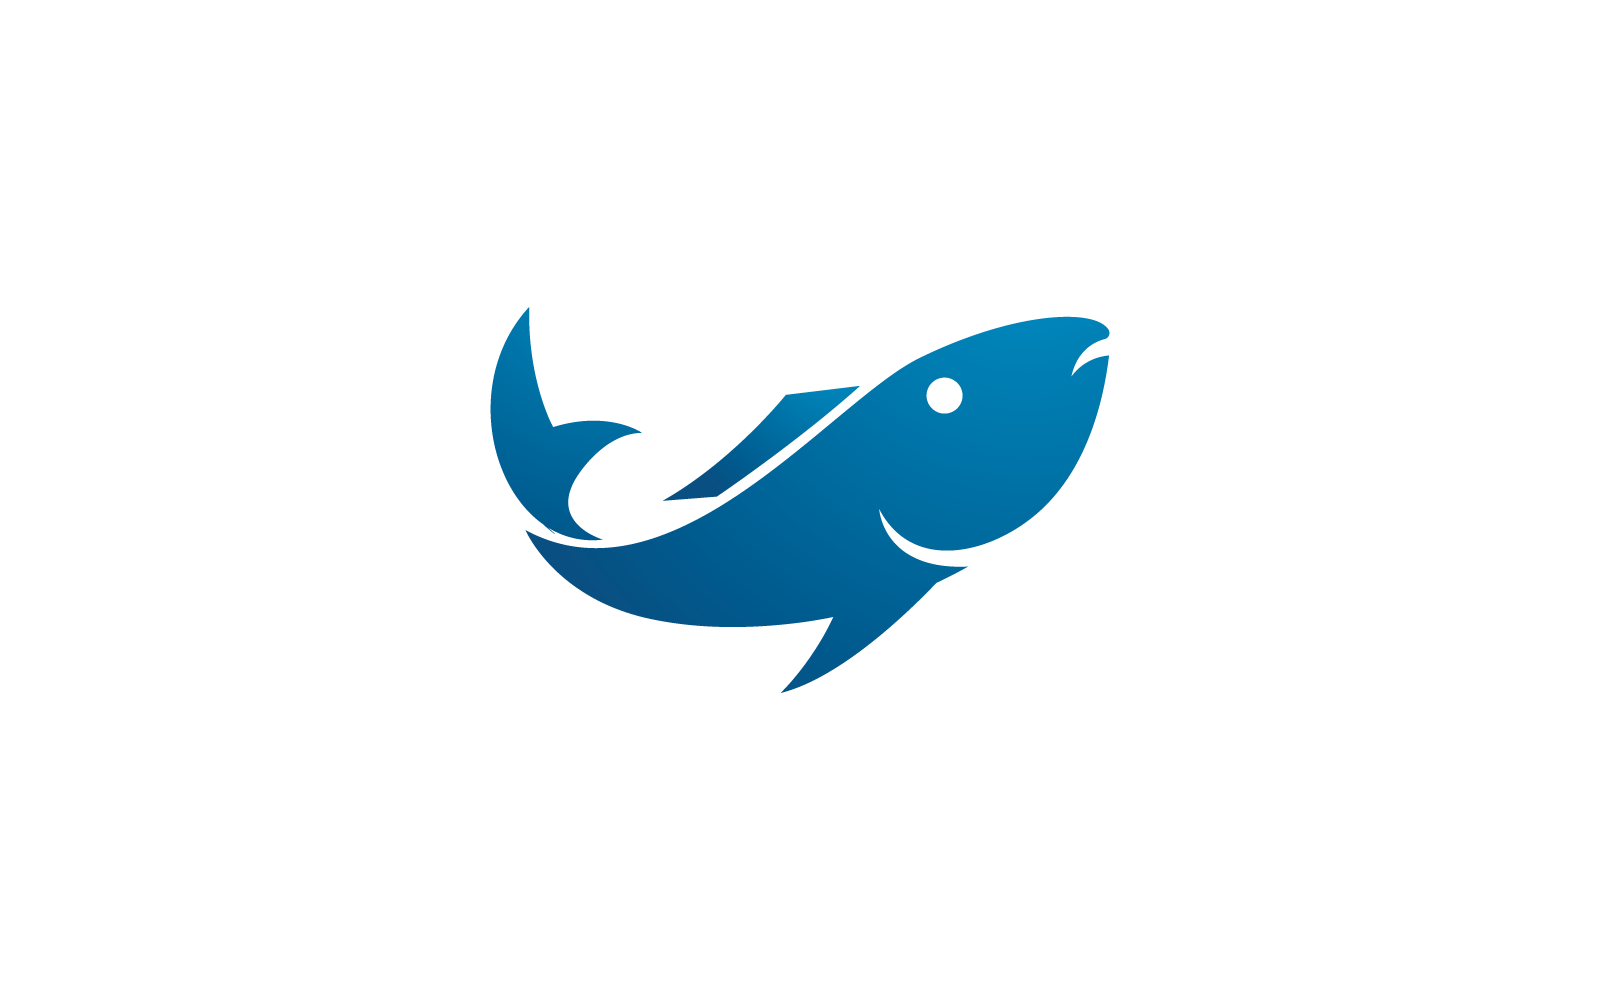 Fish ilustration logo vector icon template